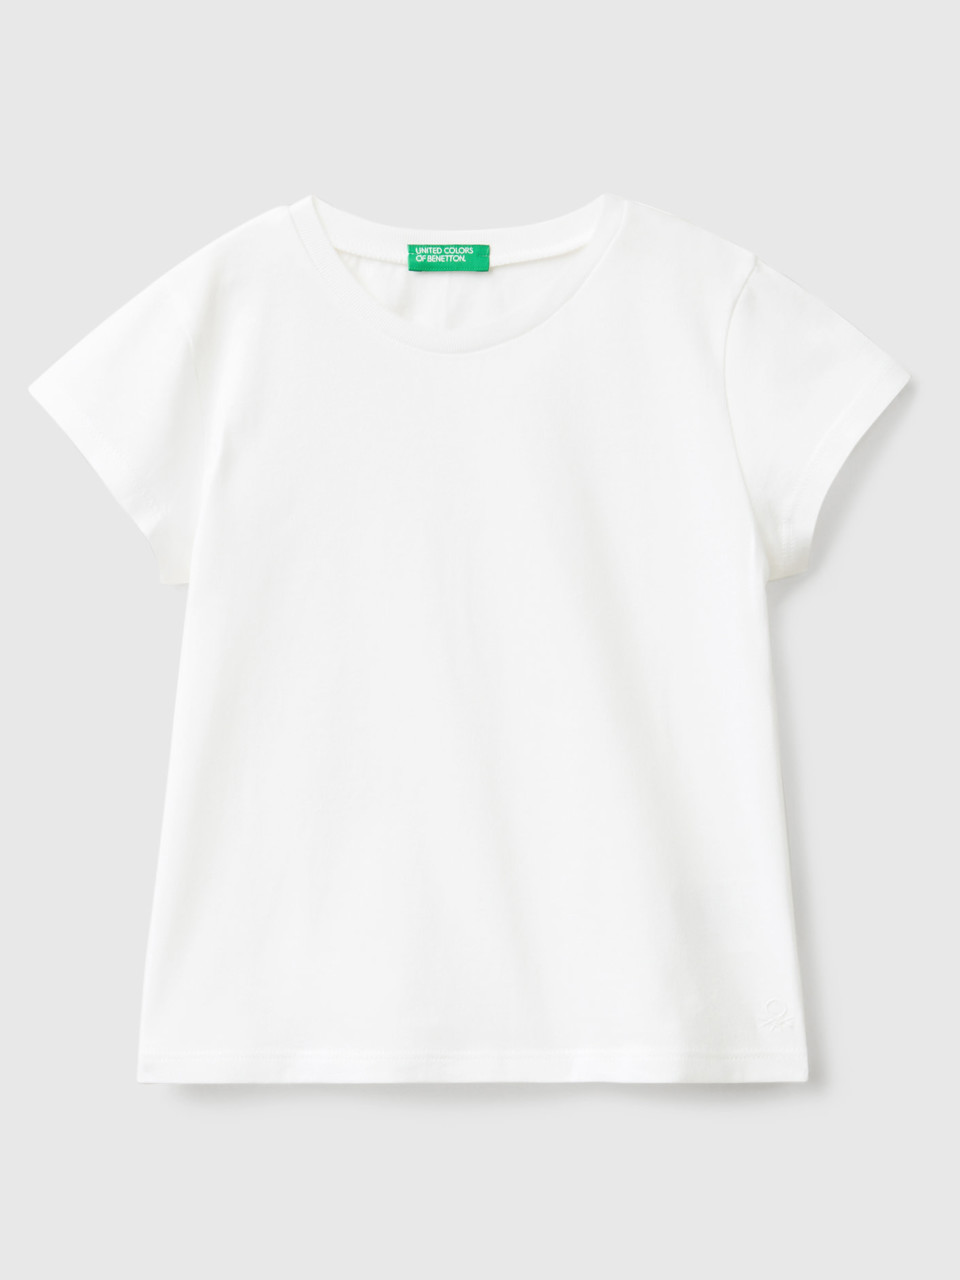 Benetton, Camiseta De 100 % Algodón Orgánico, Blanco, Niños